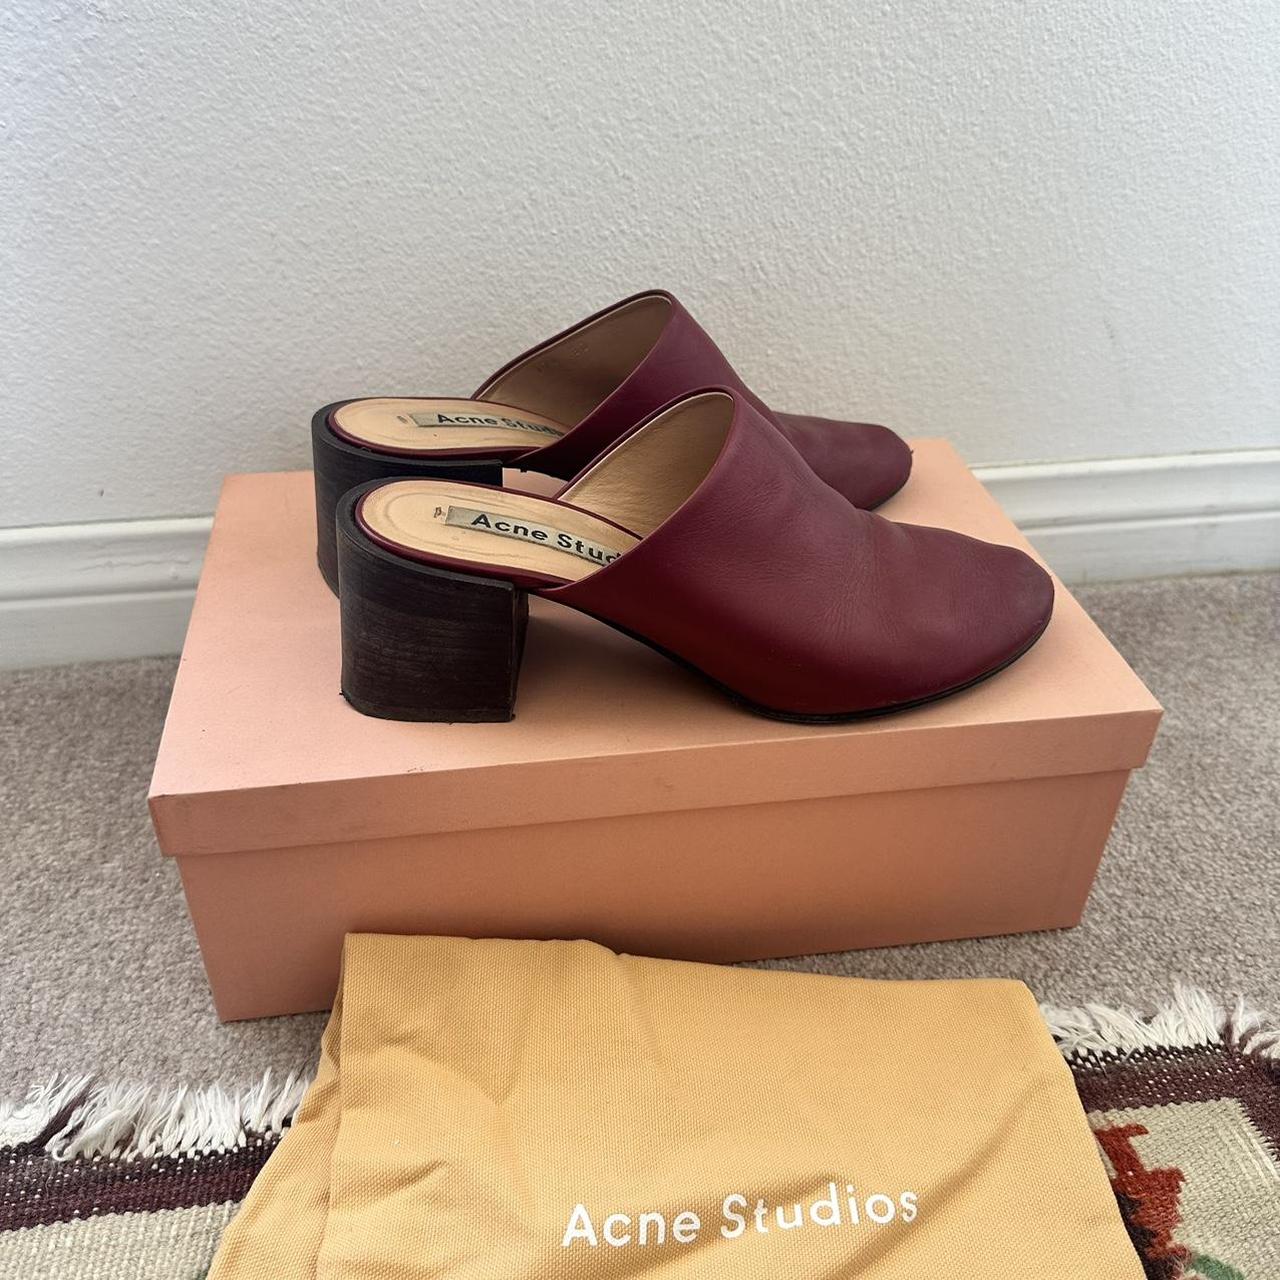 Acne Studios Red Leather Heels